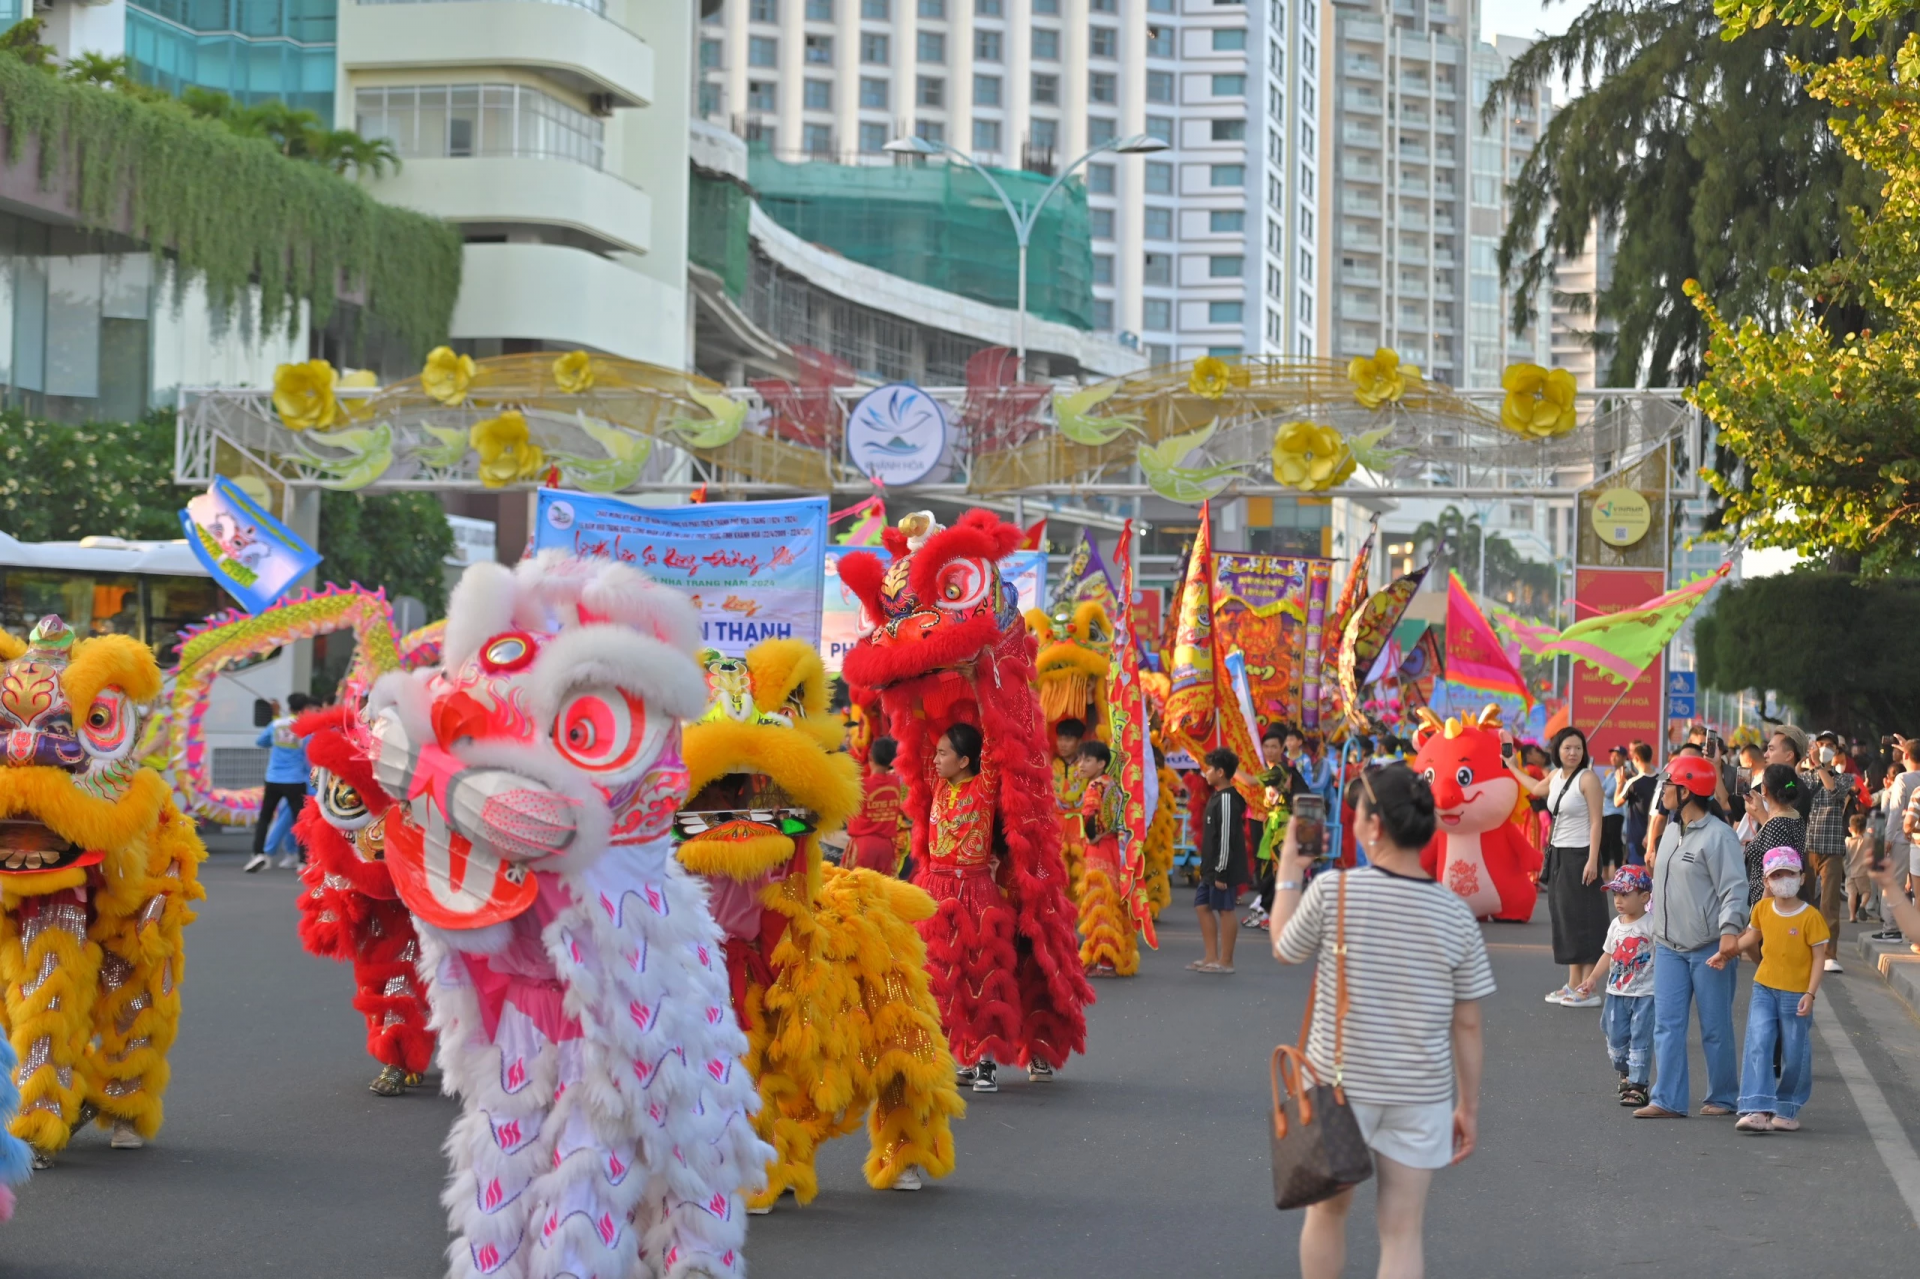 Unicorn-lion-dragon clubs parade along Tran Phu Street

